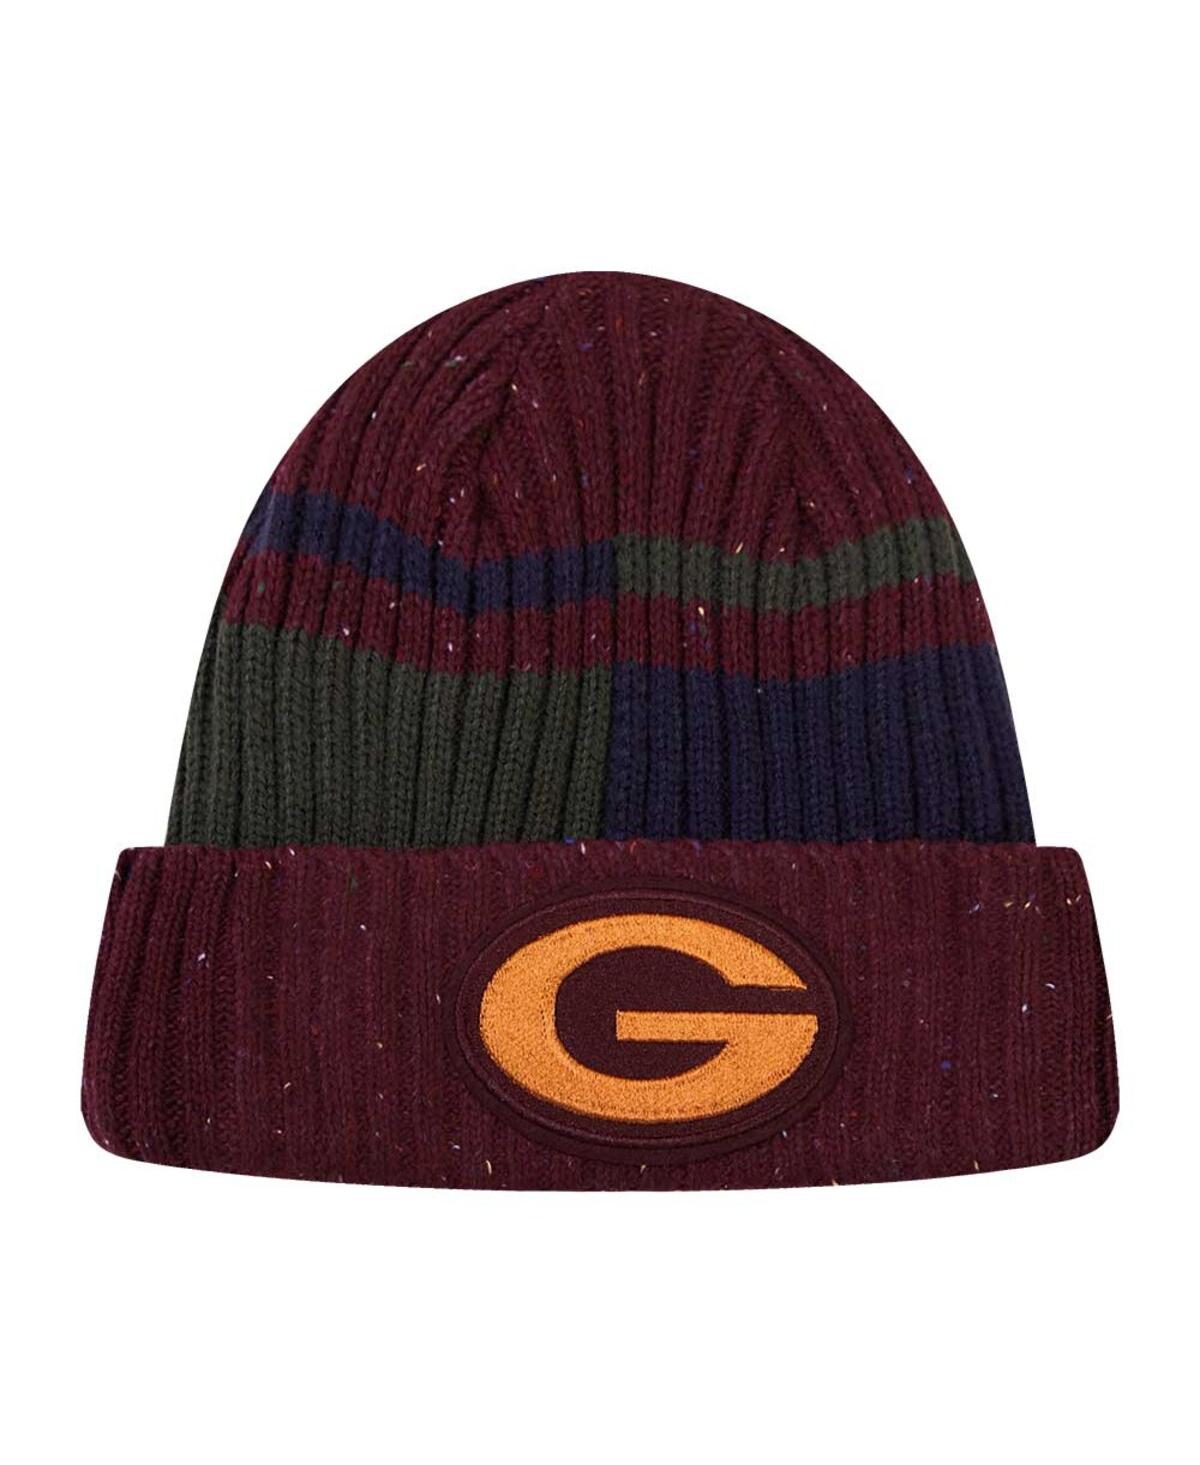 Shop Pro Standard Men's  Burgundy Green Bay Packers Speckled Cuffed Knit Hat